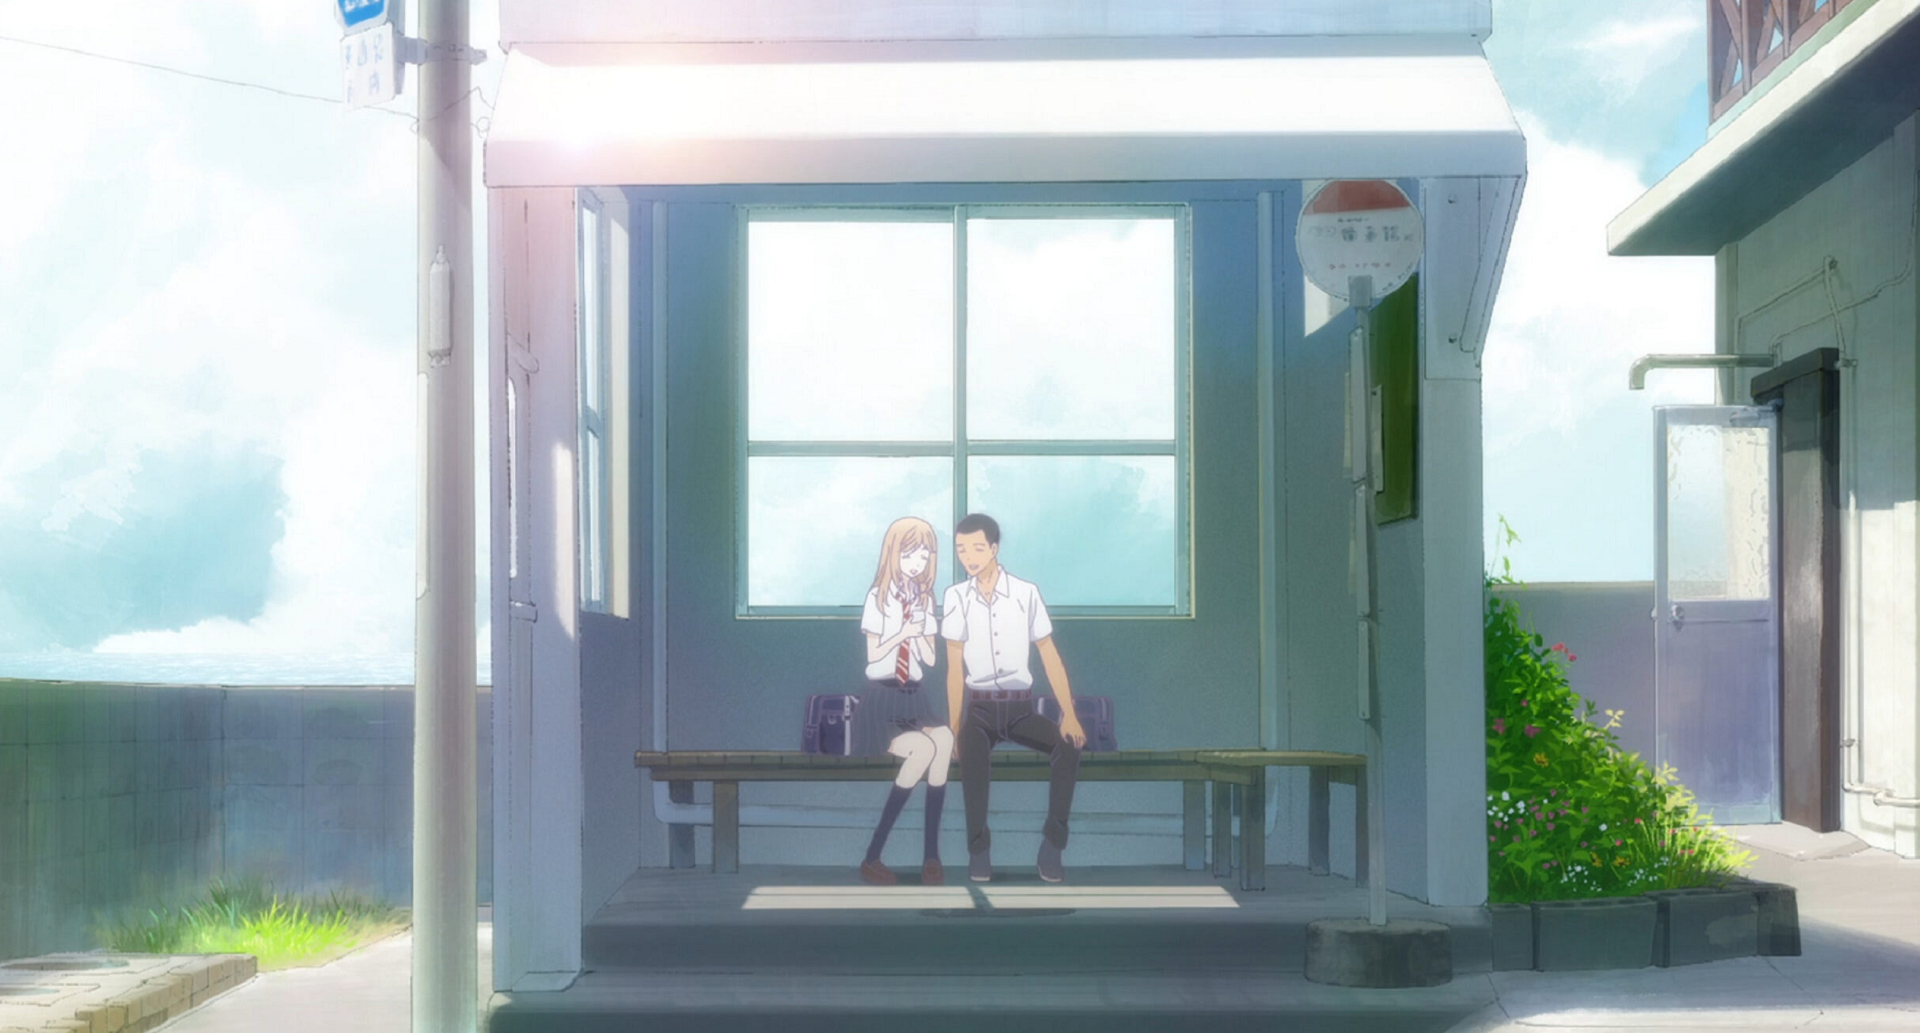 Kageki Shojo Episode 5: Finding One's Voice - Anime Corner